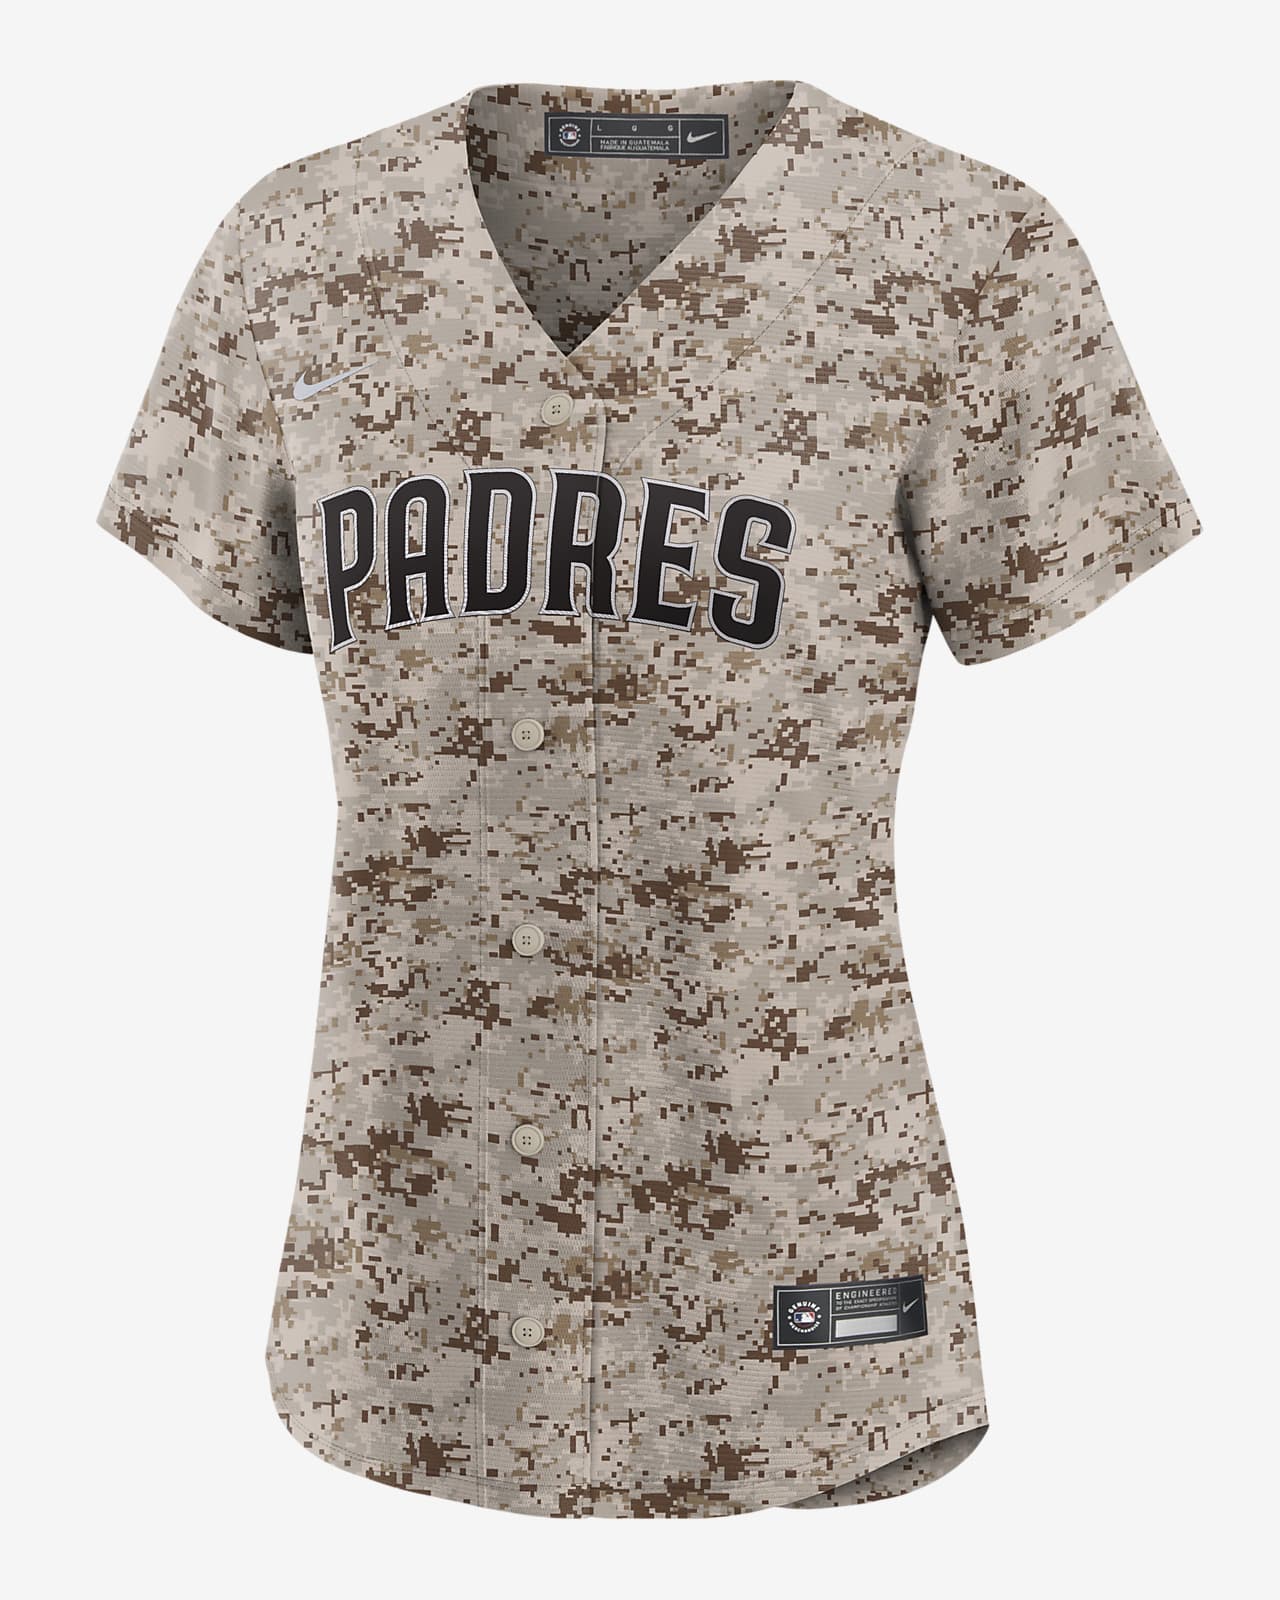 Jersey Nike de la MLB Replica para mujer Manny Machado San Diego Padres USMC